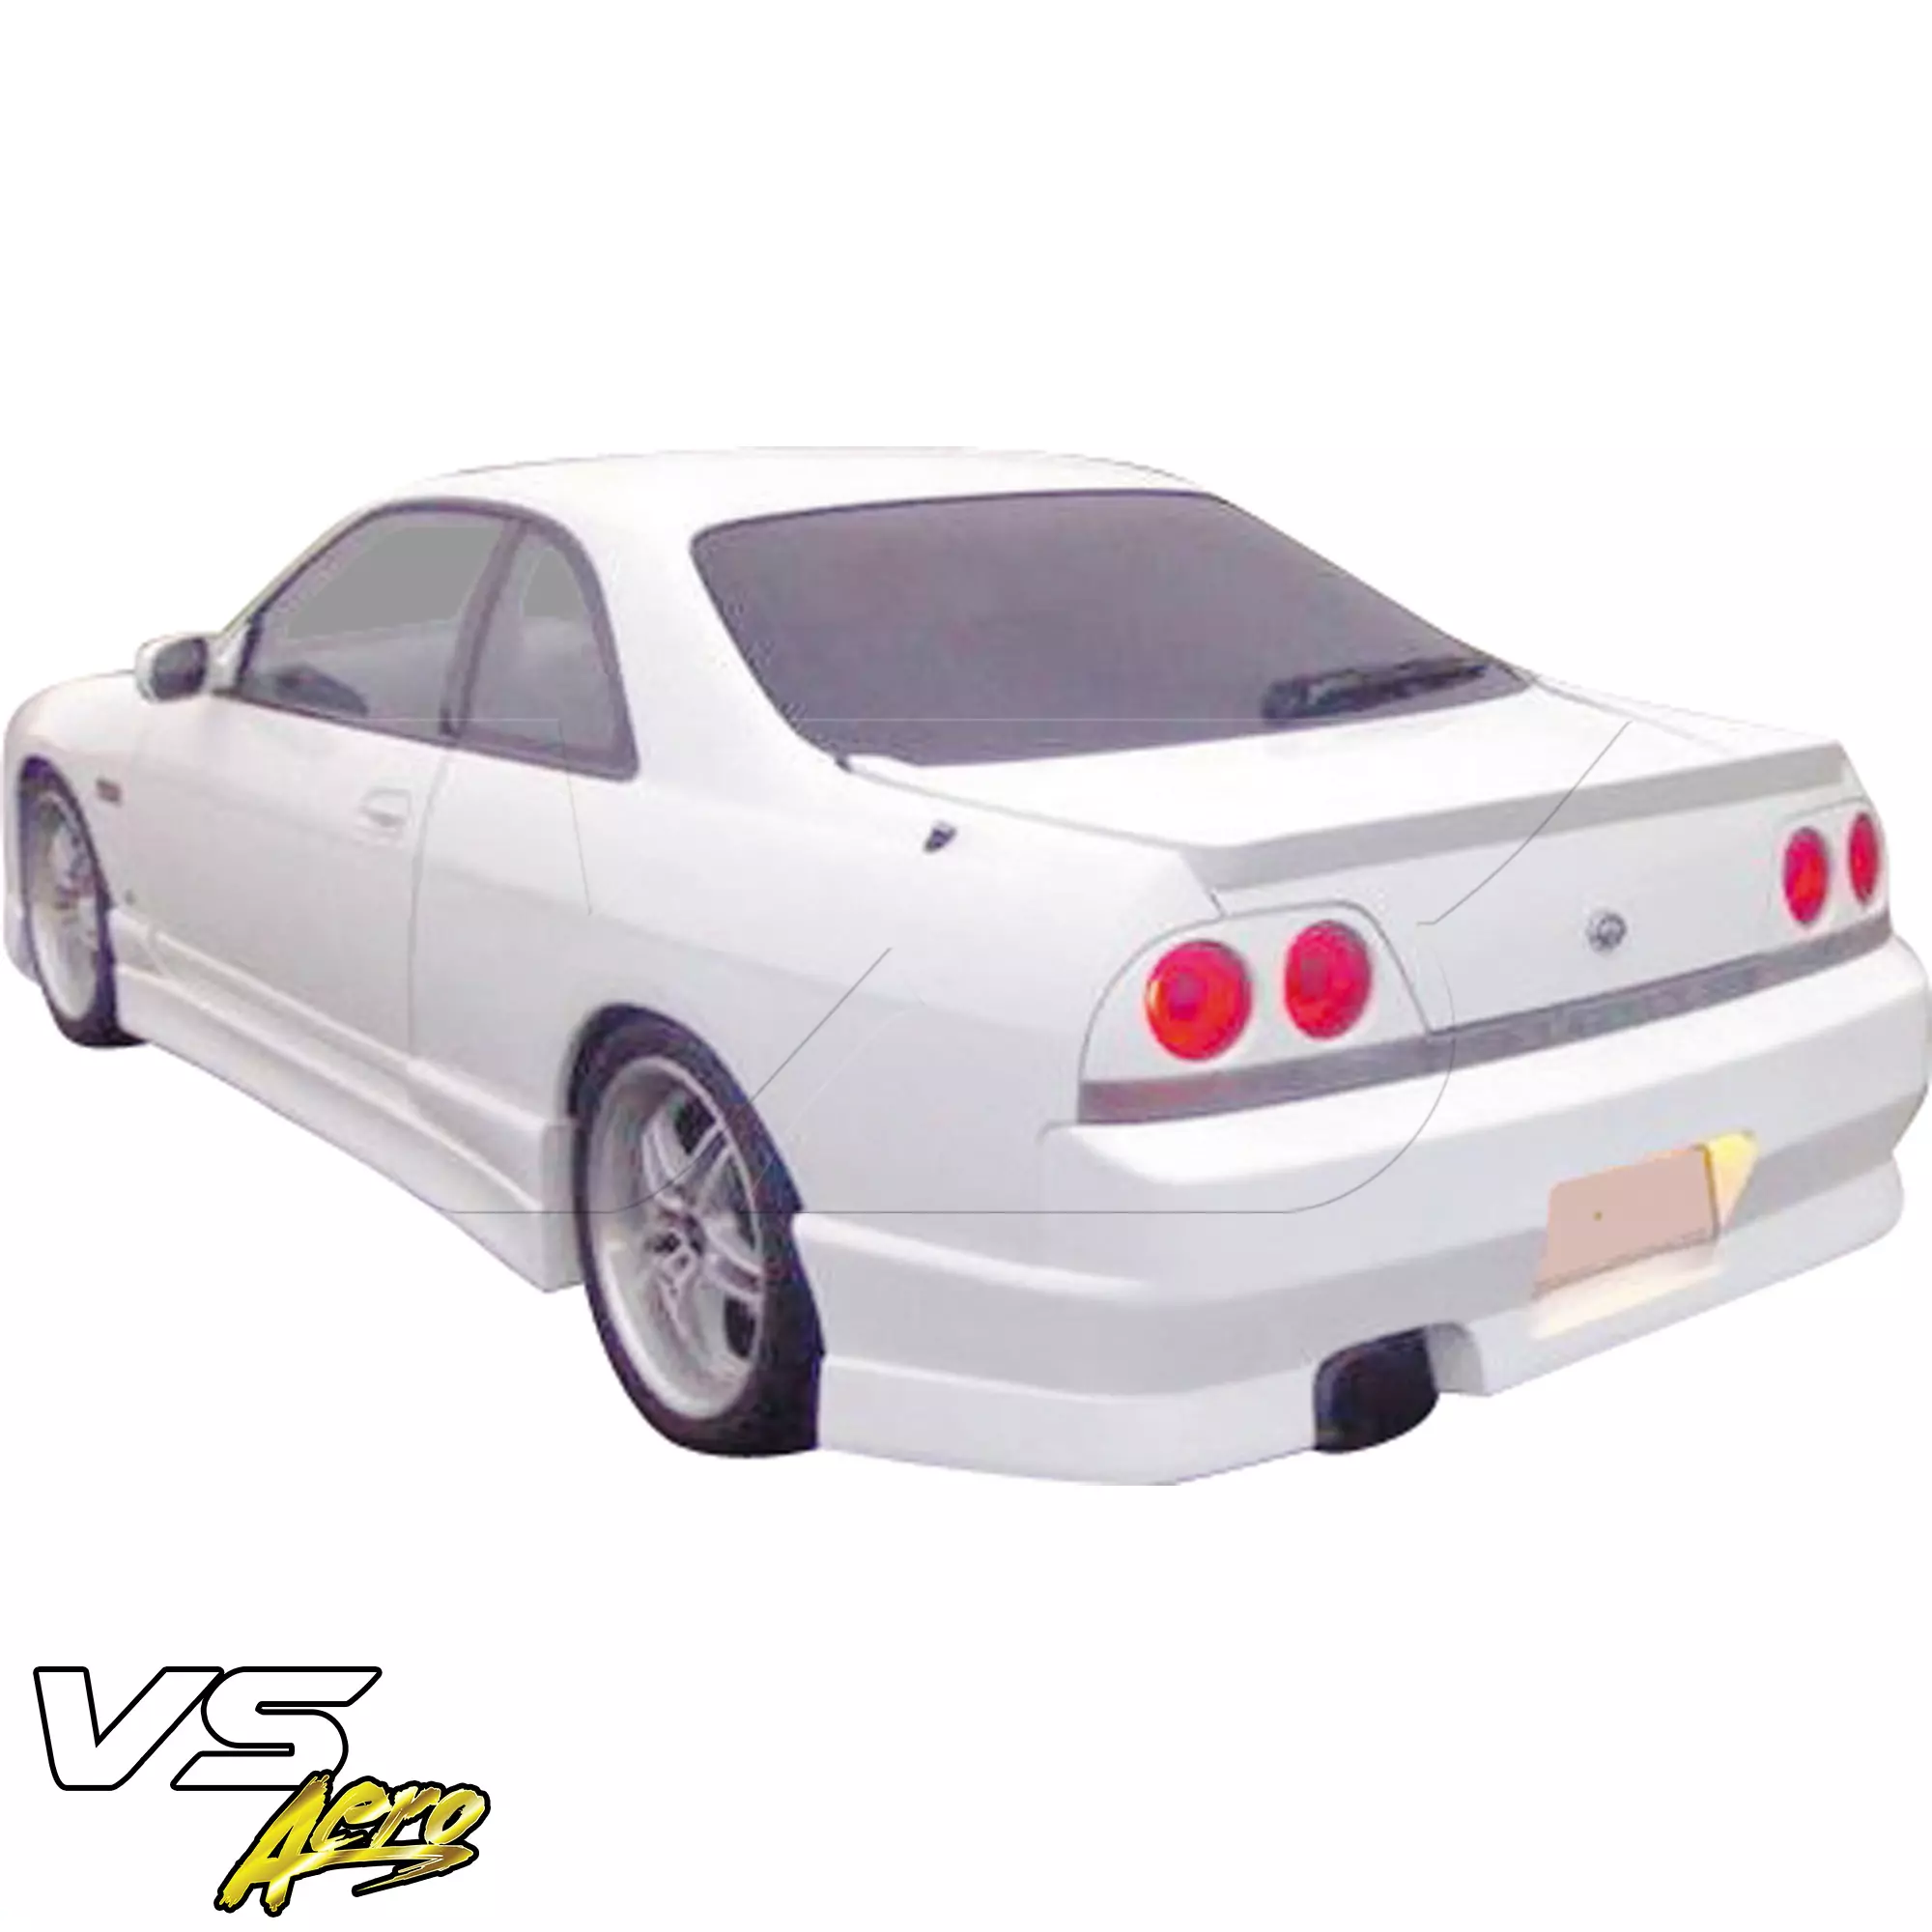 VSaero FRP MSPO Body Kit 4pc > Nissan Skyline R33 GTS 1995-1998 > 2dr Coupe - Image 33